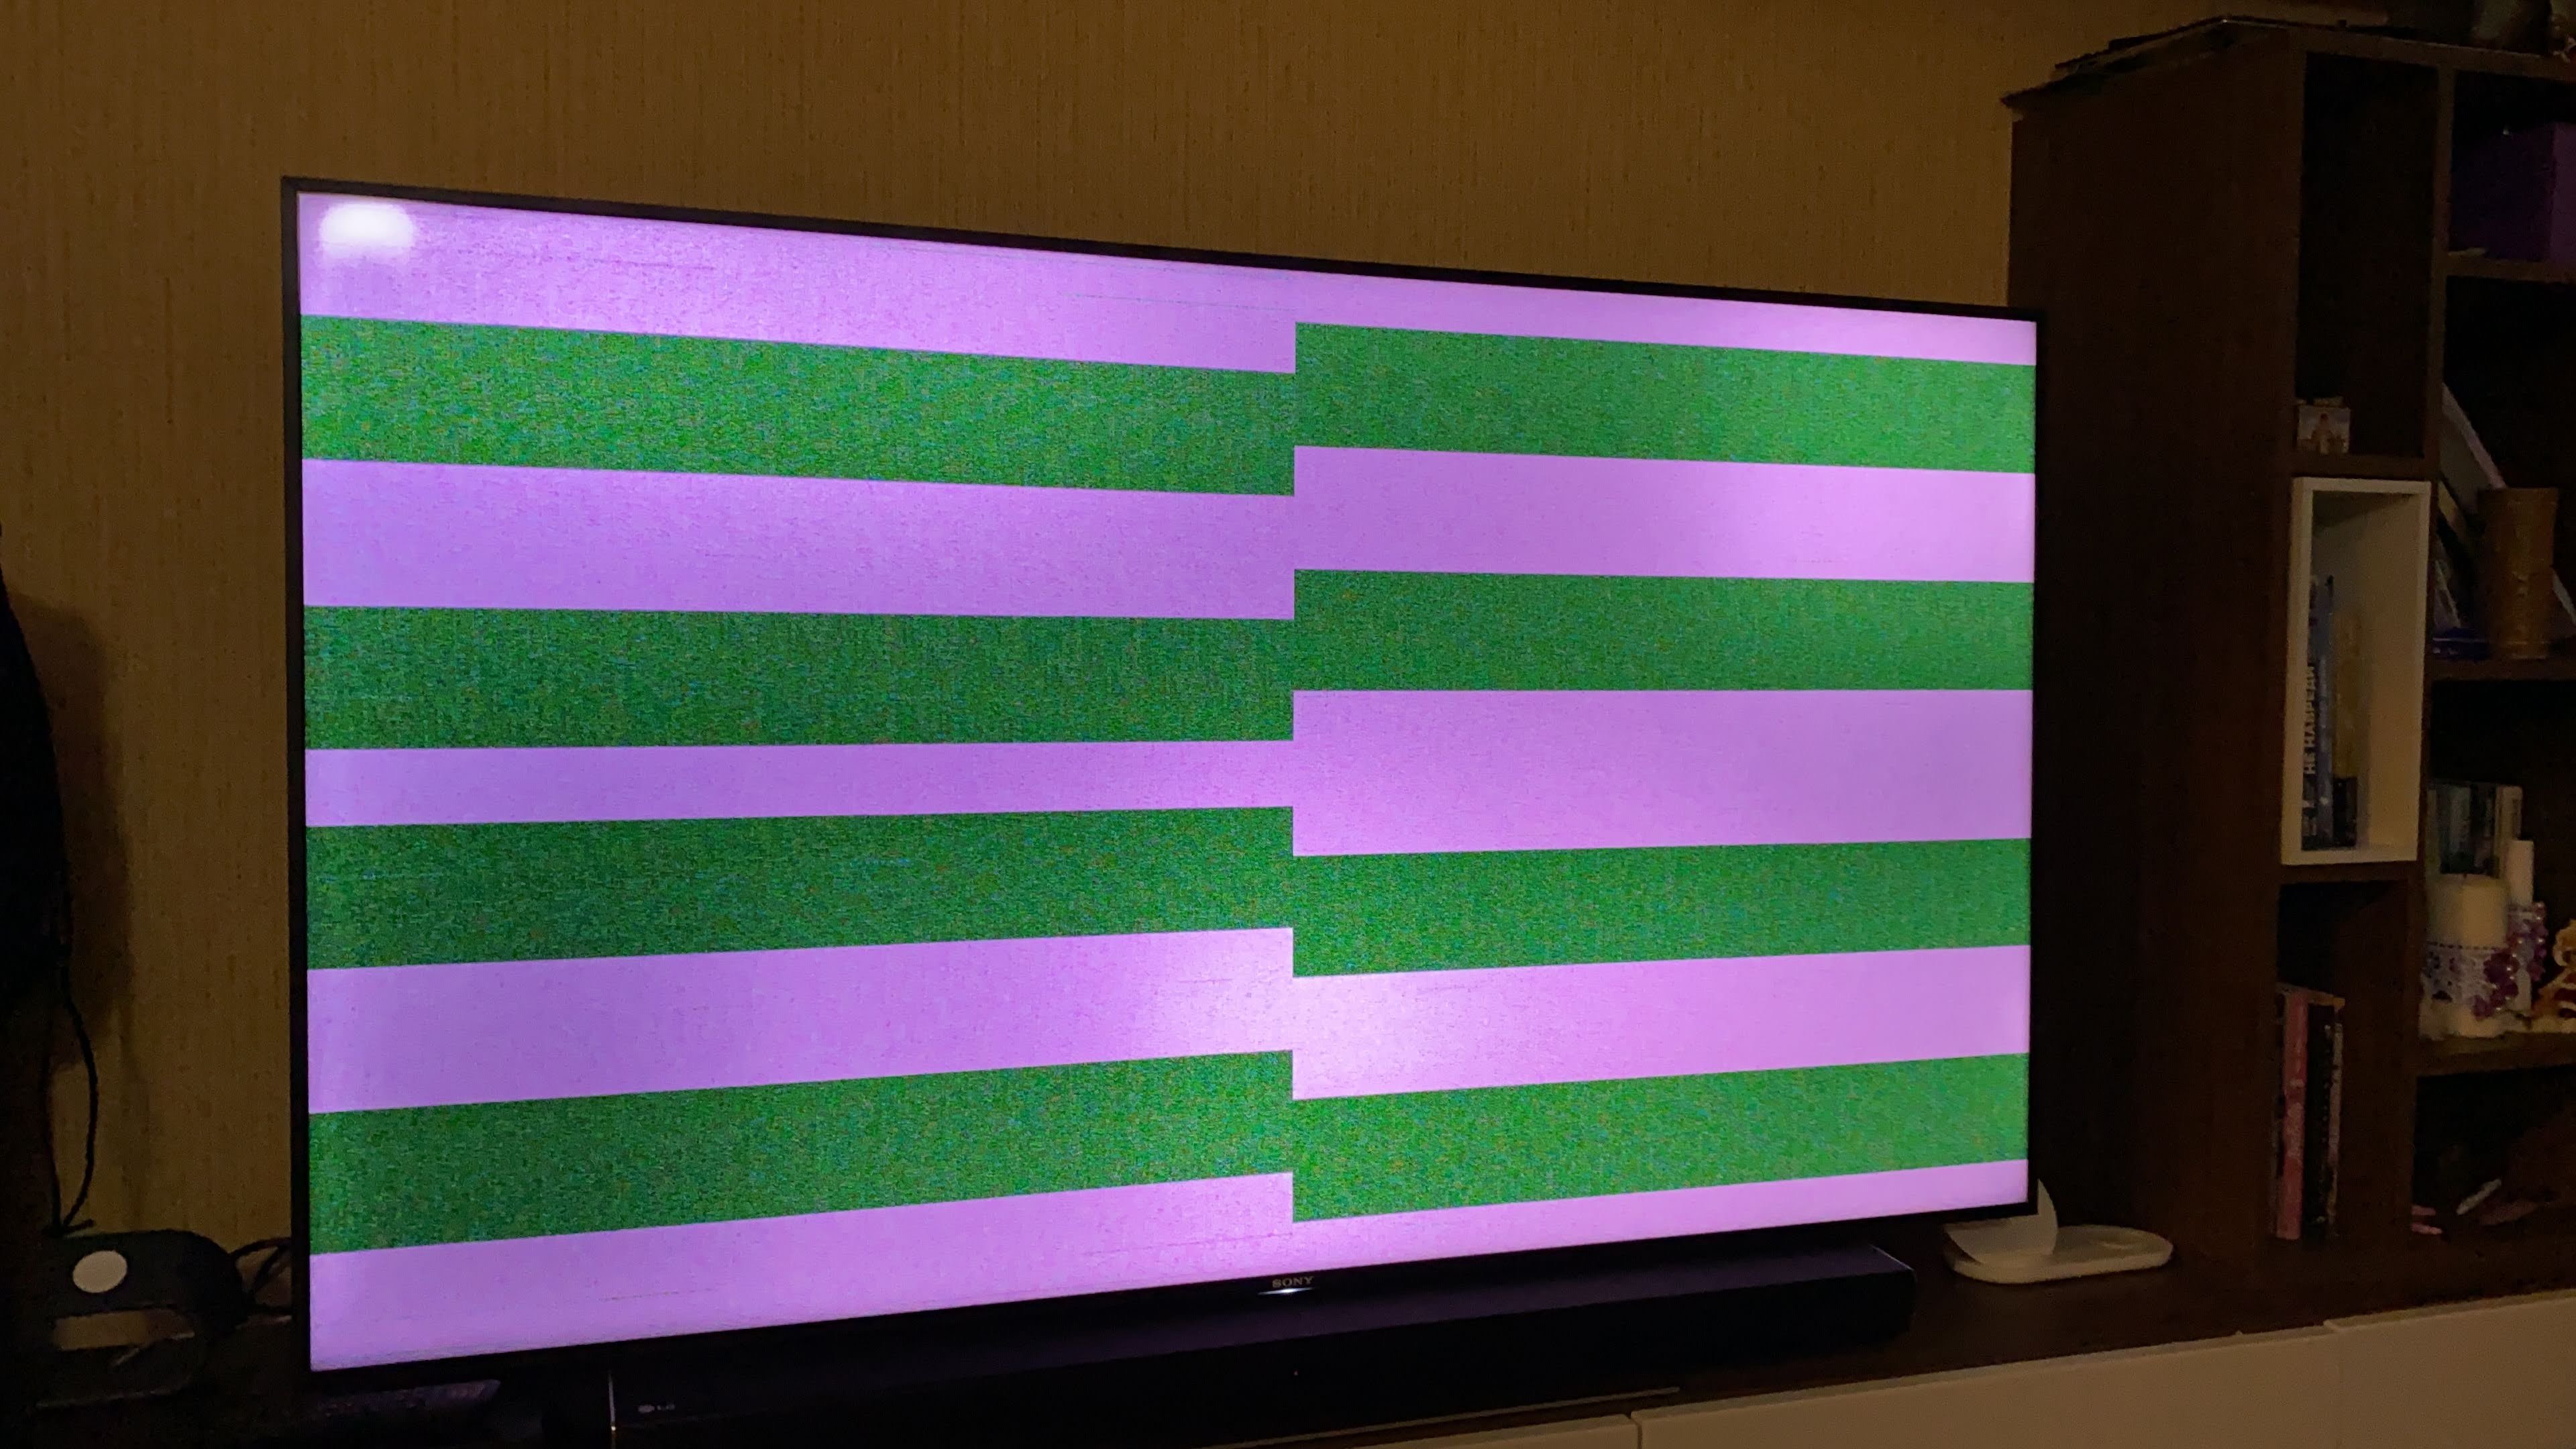 На экране 4 полосы. KD-65x9005a полосы на экране. Горизонтальные полоски на экране. Горизонтальные полосы на телевизоре. Полоски на телевизоре.